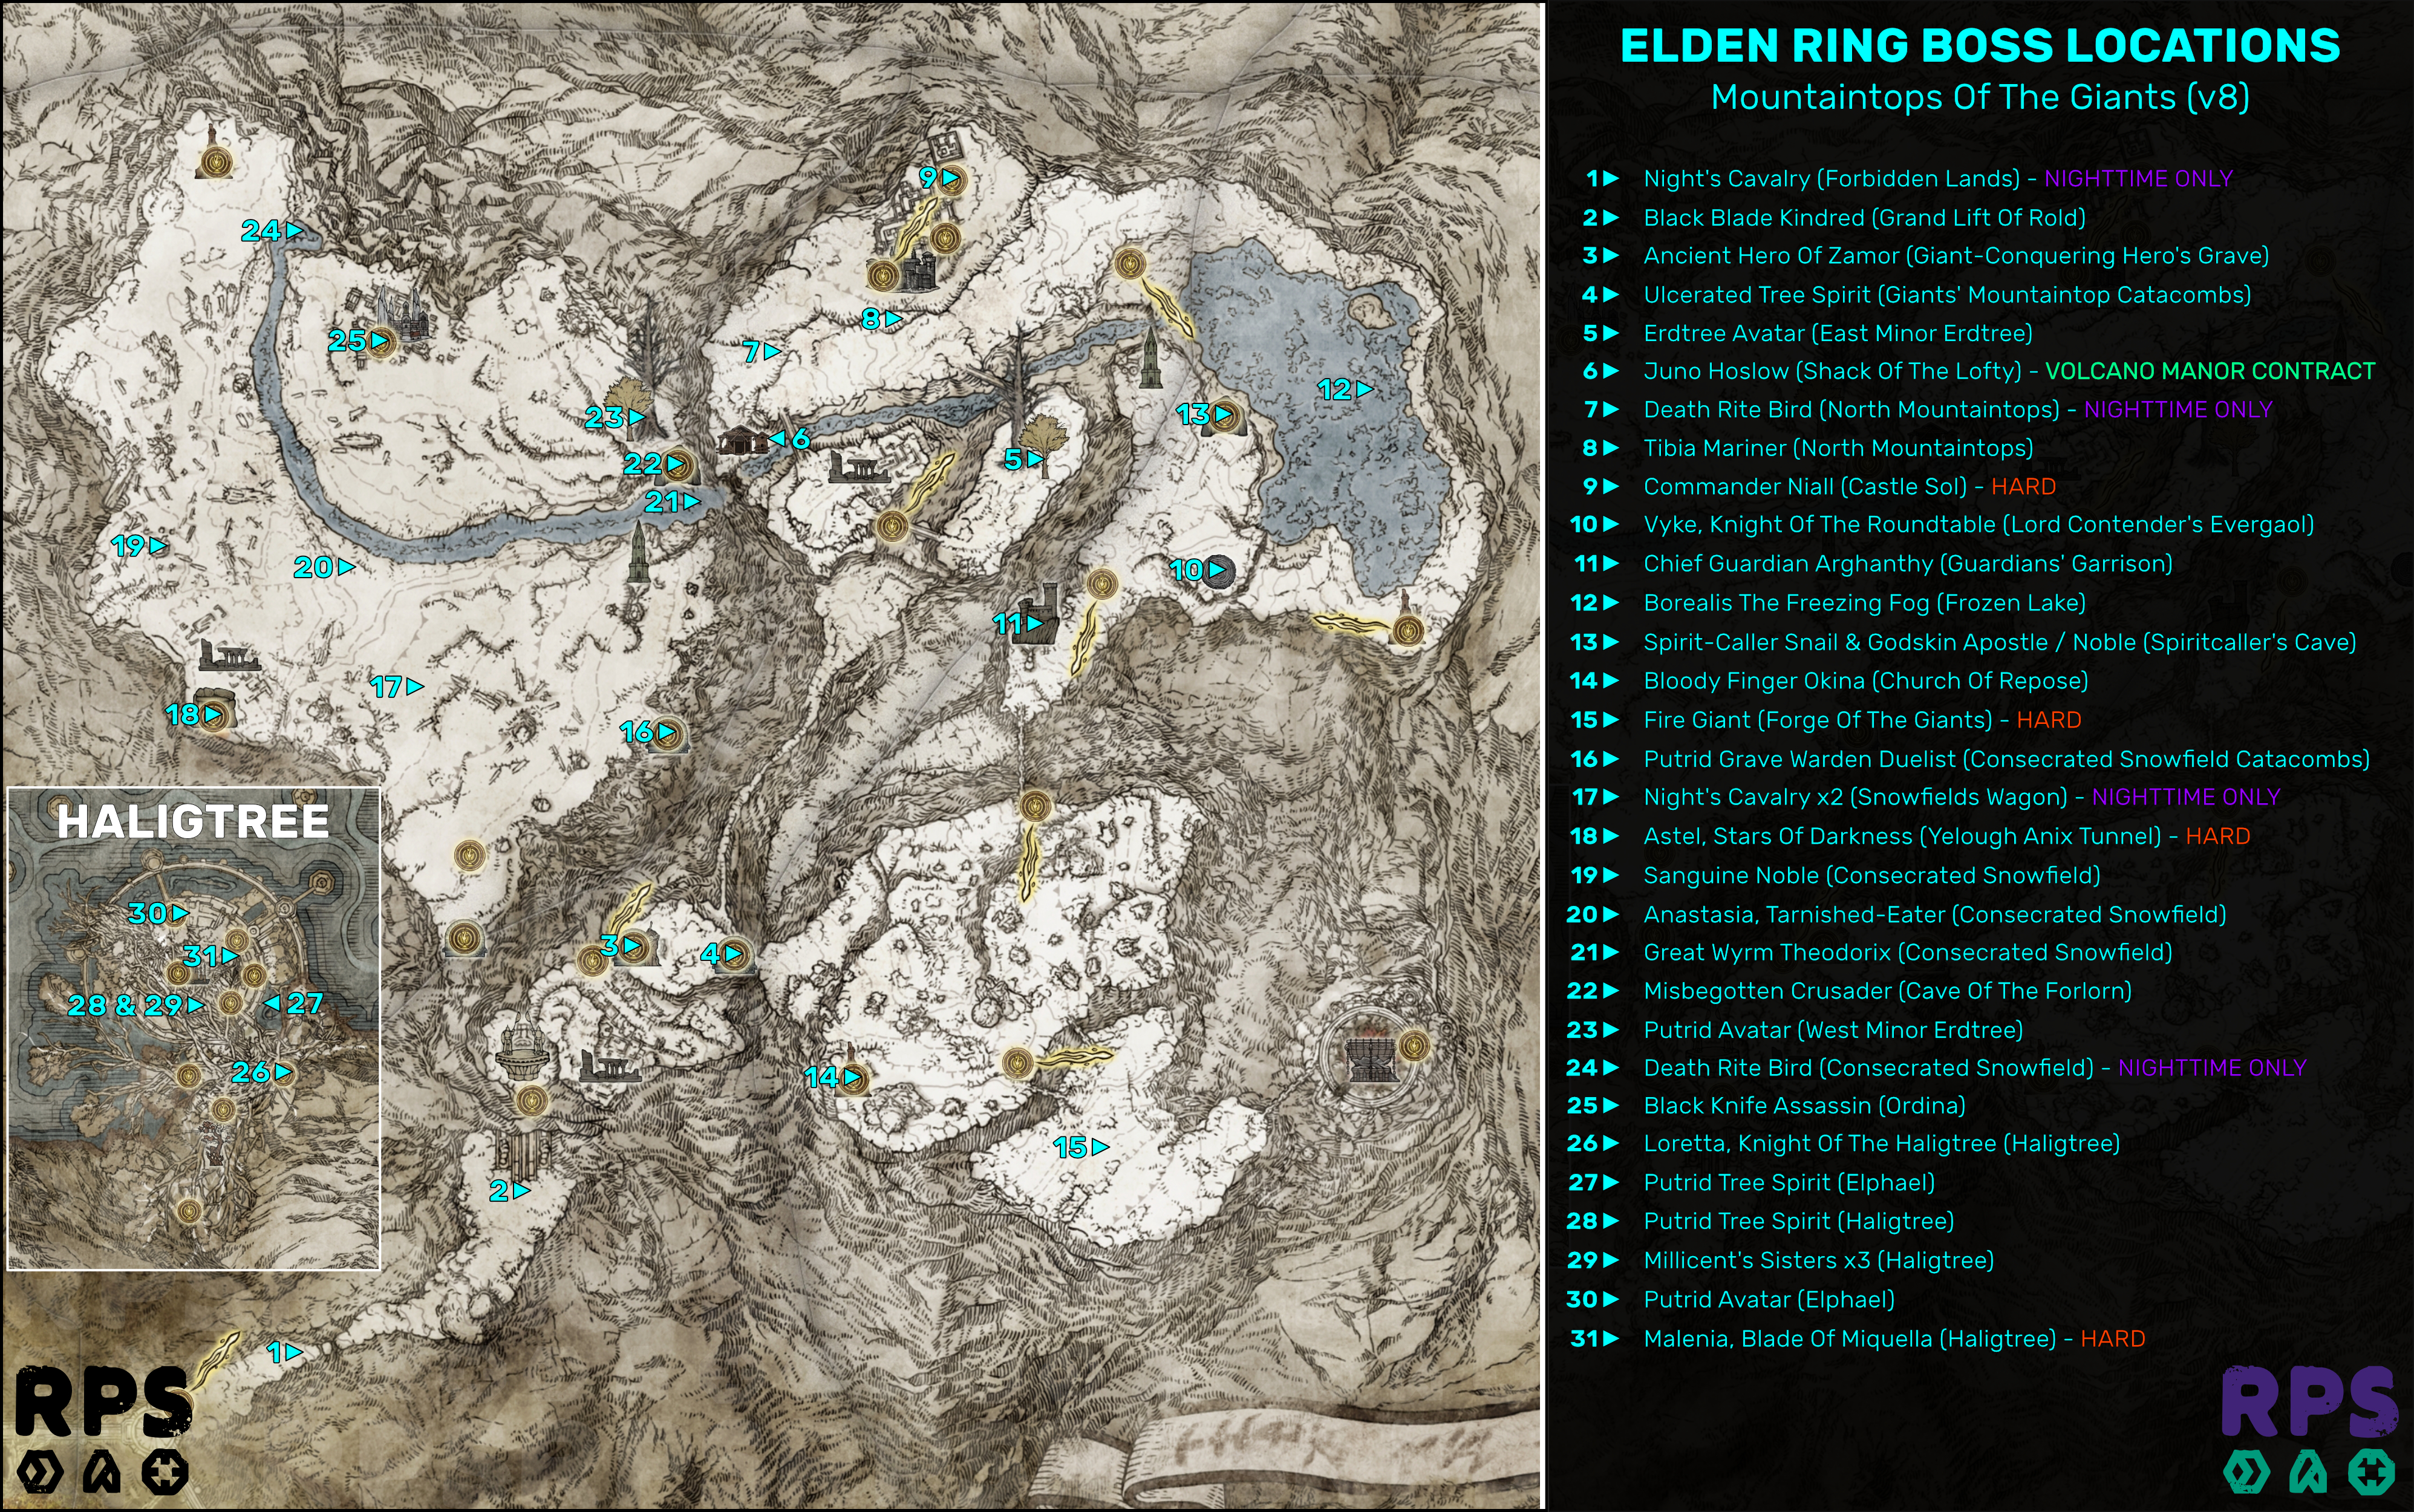 Elden Ring: Ranni's Great Rune Location Has Been Hiding In Plain Sight